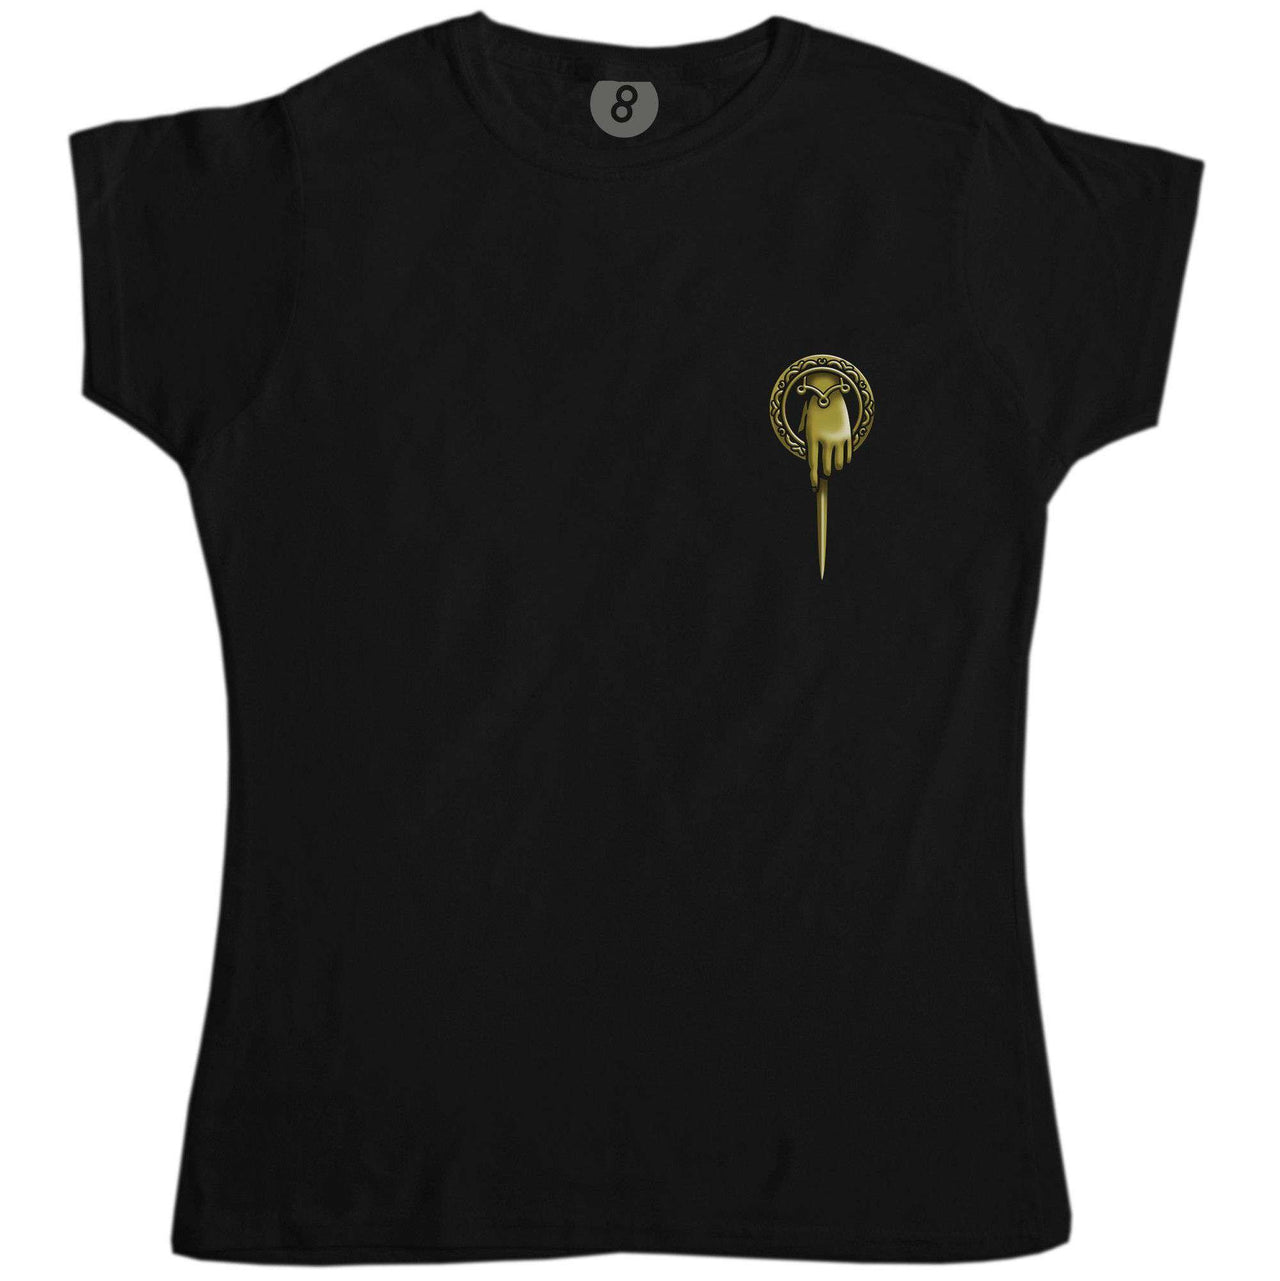 Kings Hand Pocket Print T-Shirt for Women 8Ball